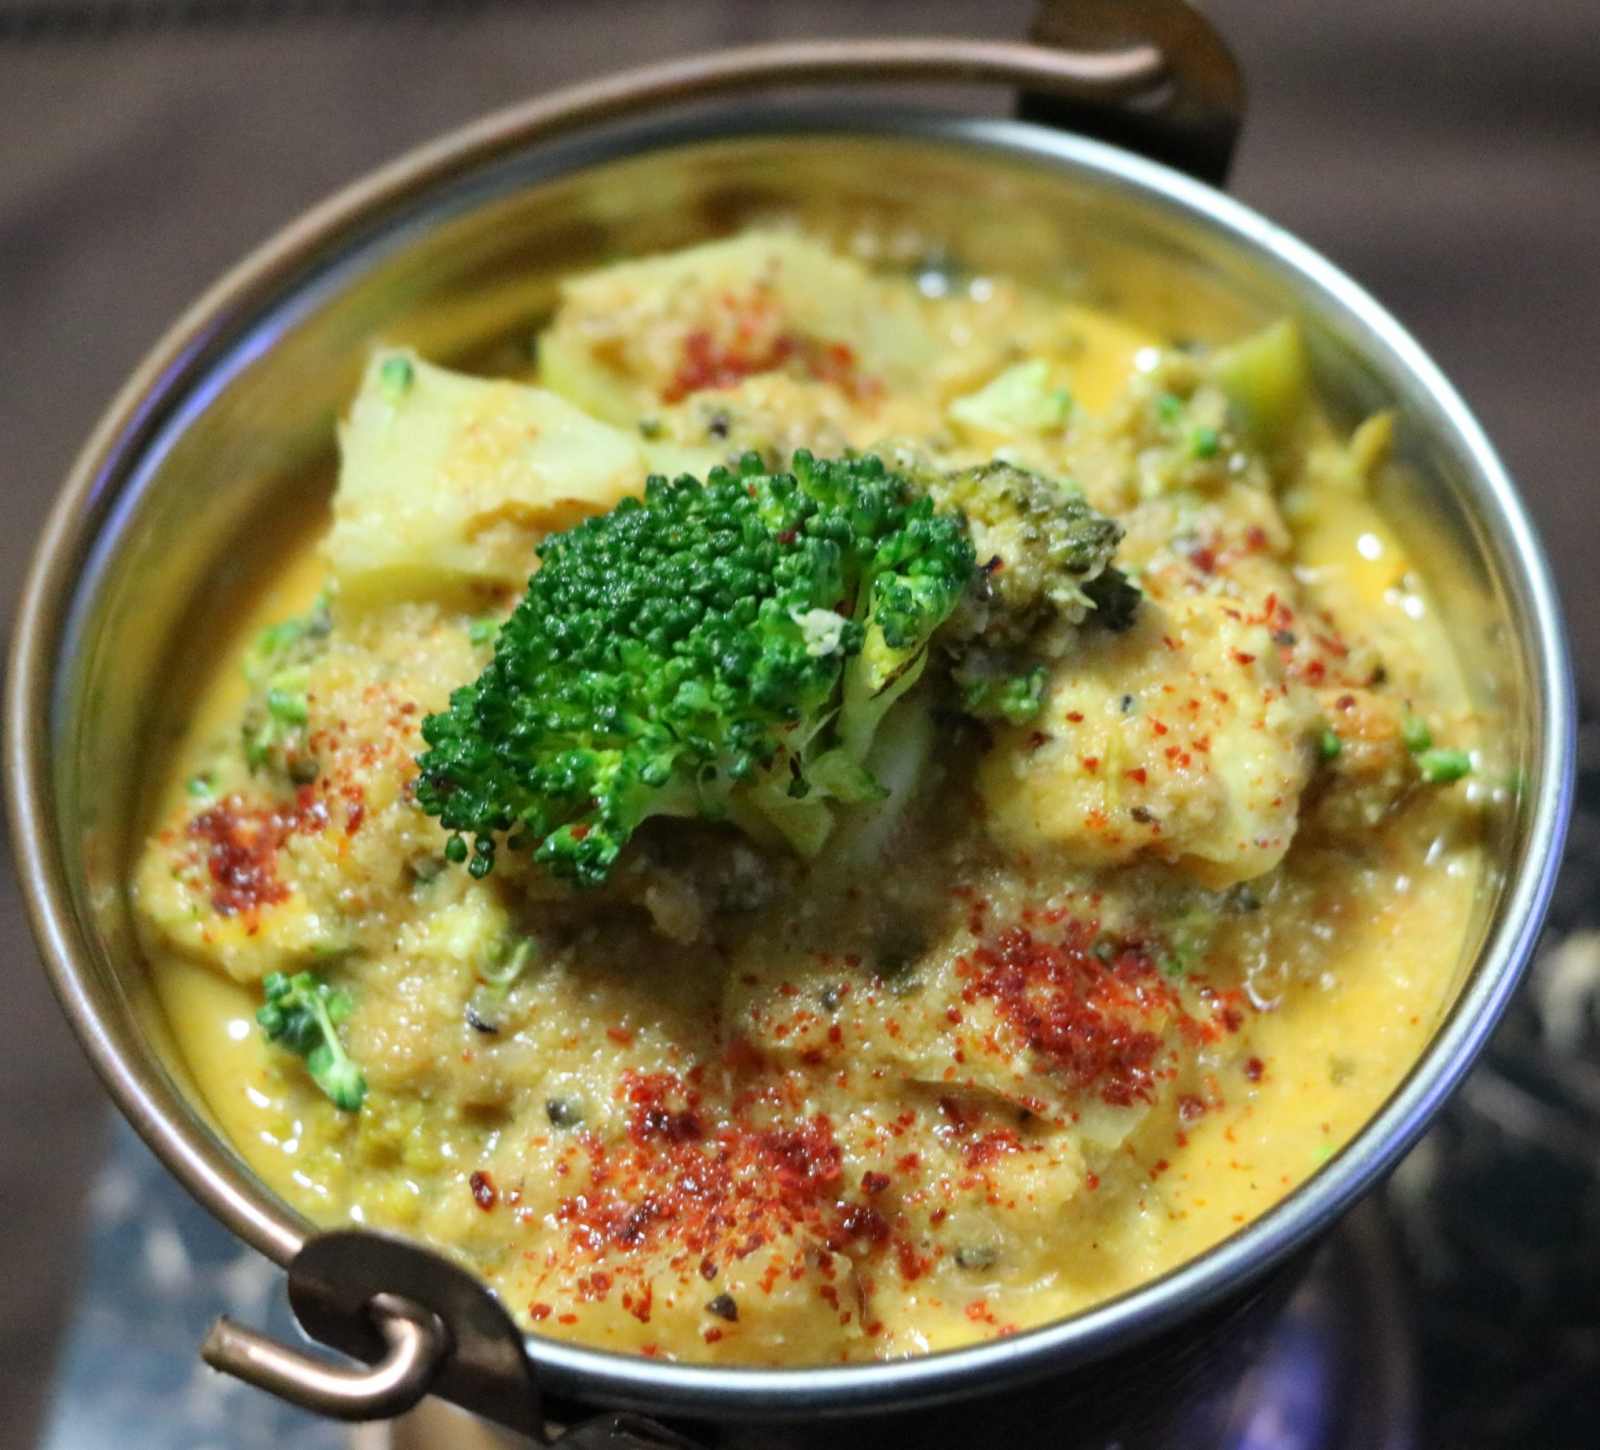 ब्रोकली पनीर और मूंगफली मसाला रेसिपी - Broccoli Paneer And Peanut Masala (Recipe In Hindi)